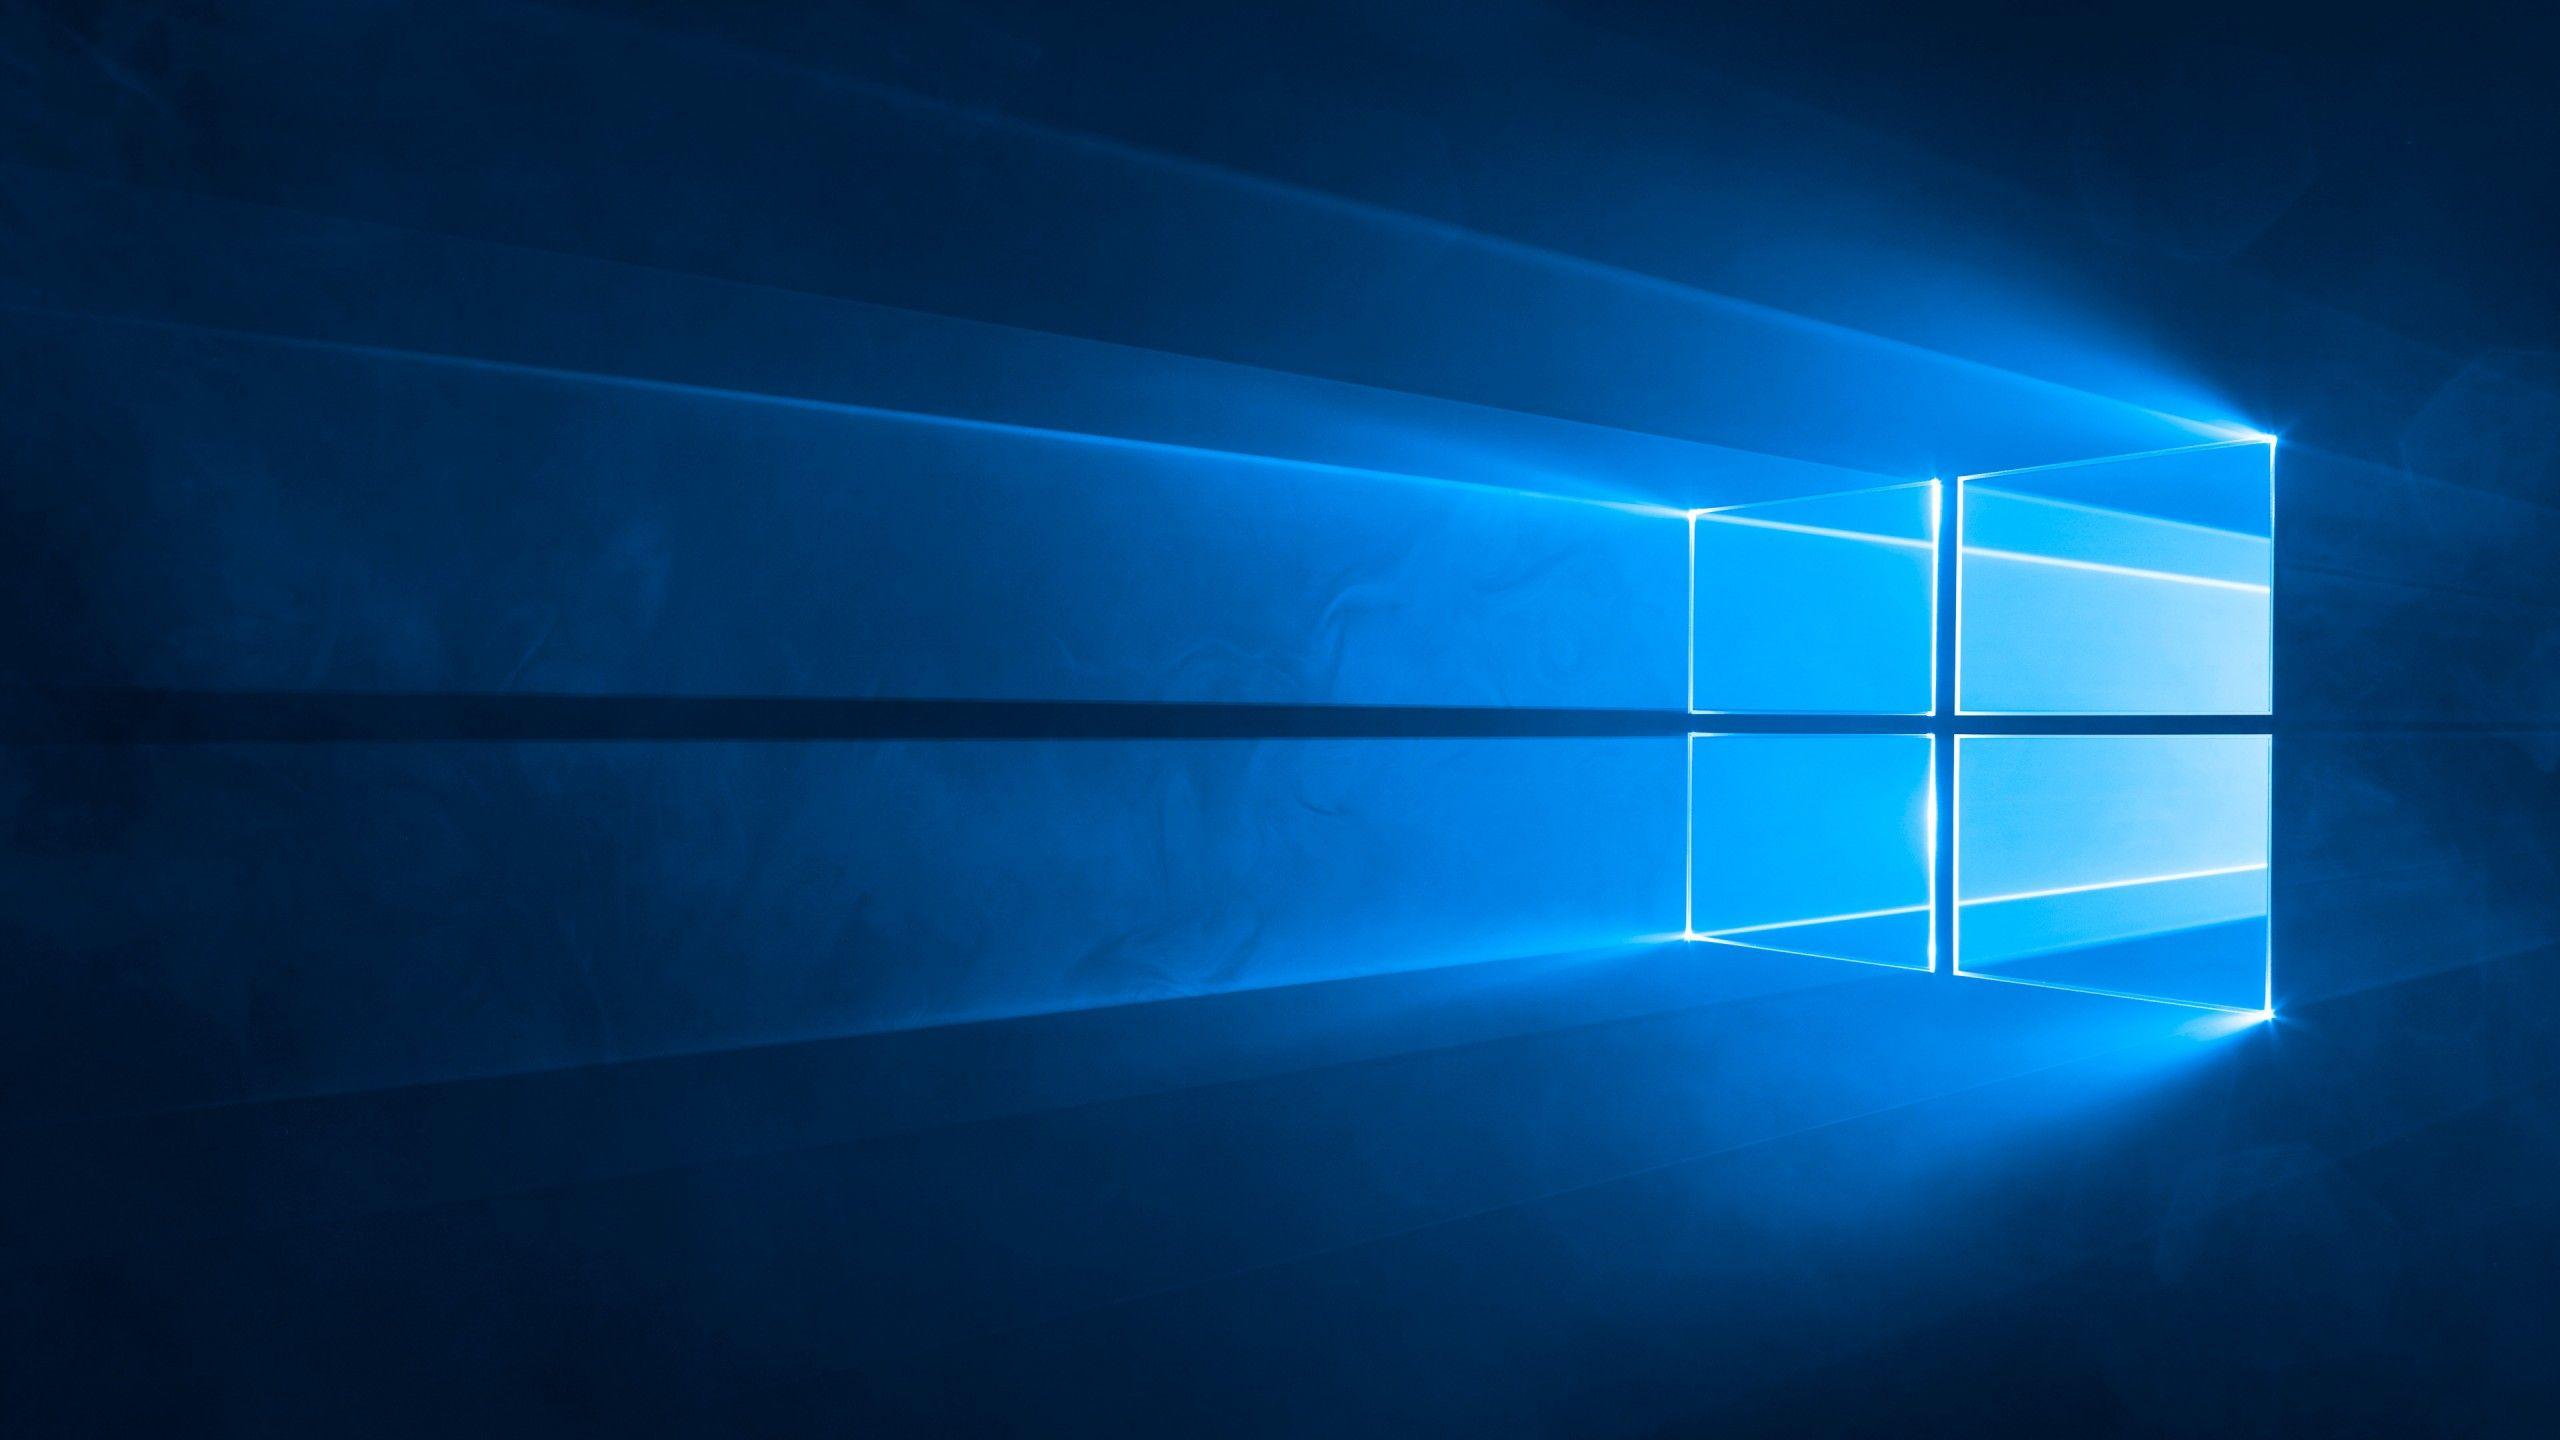 Wallpapers Windows 10, 4k, 5k wallpaper, Microsoft, blue, OS